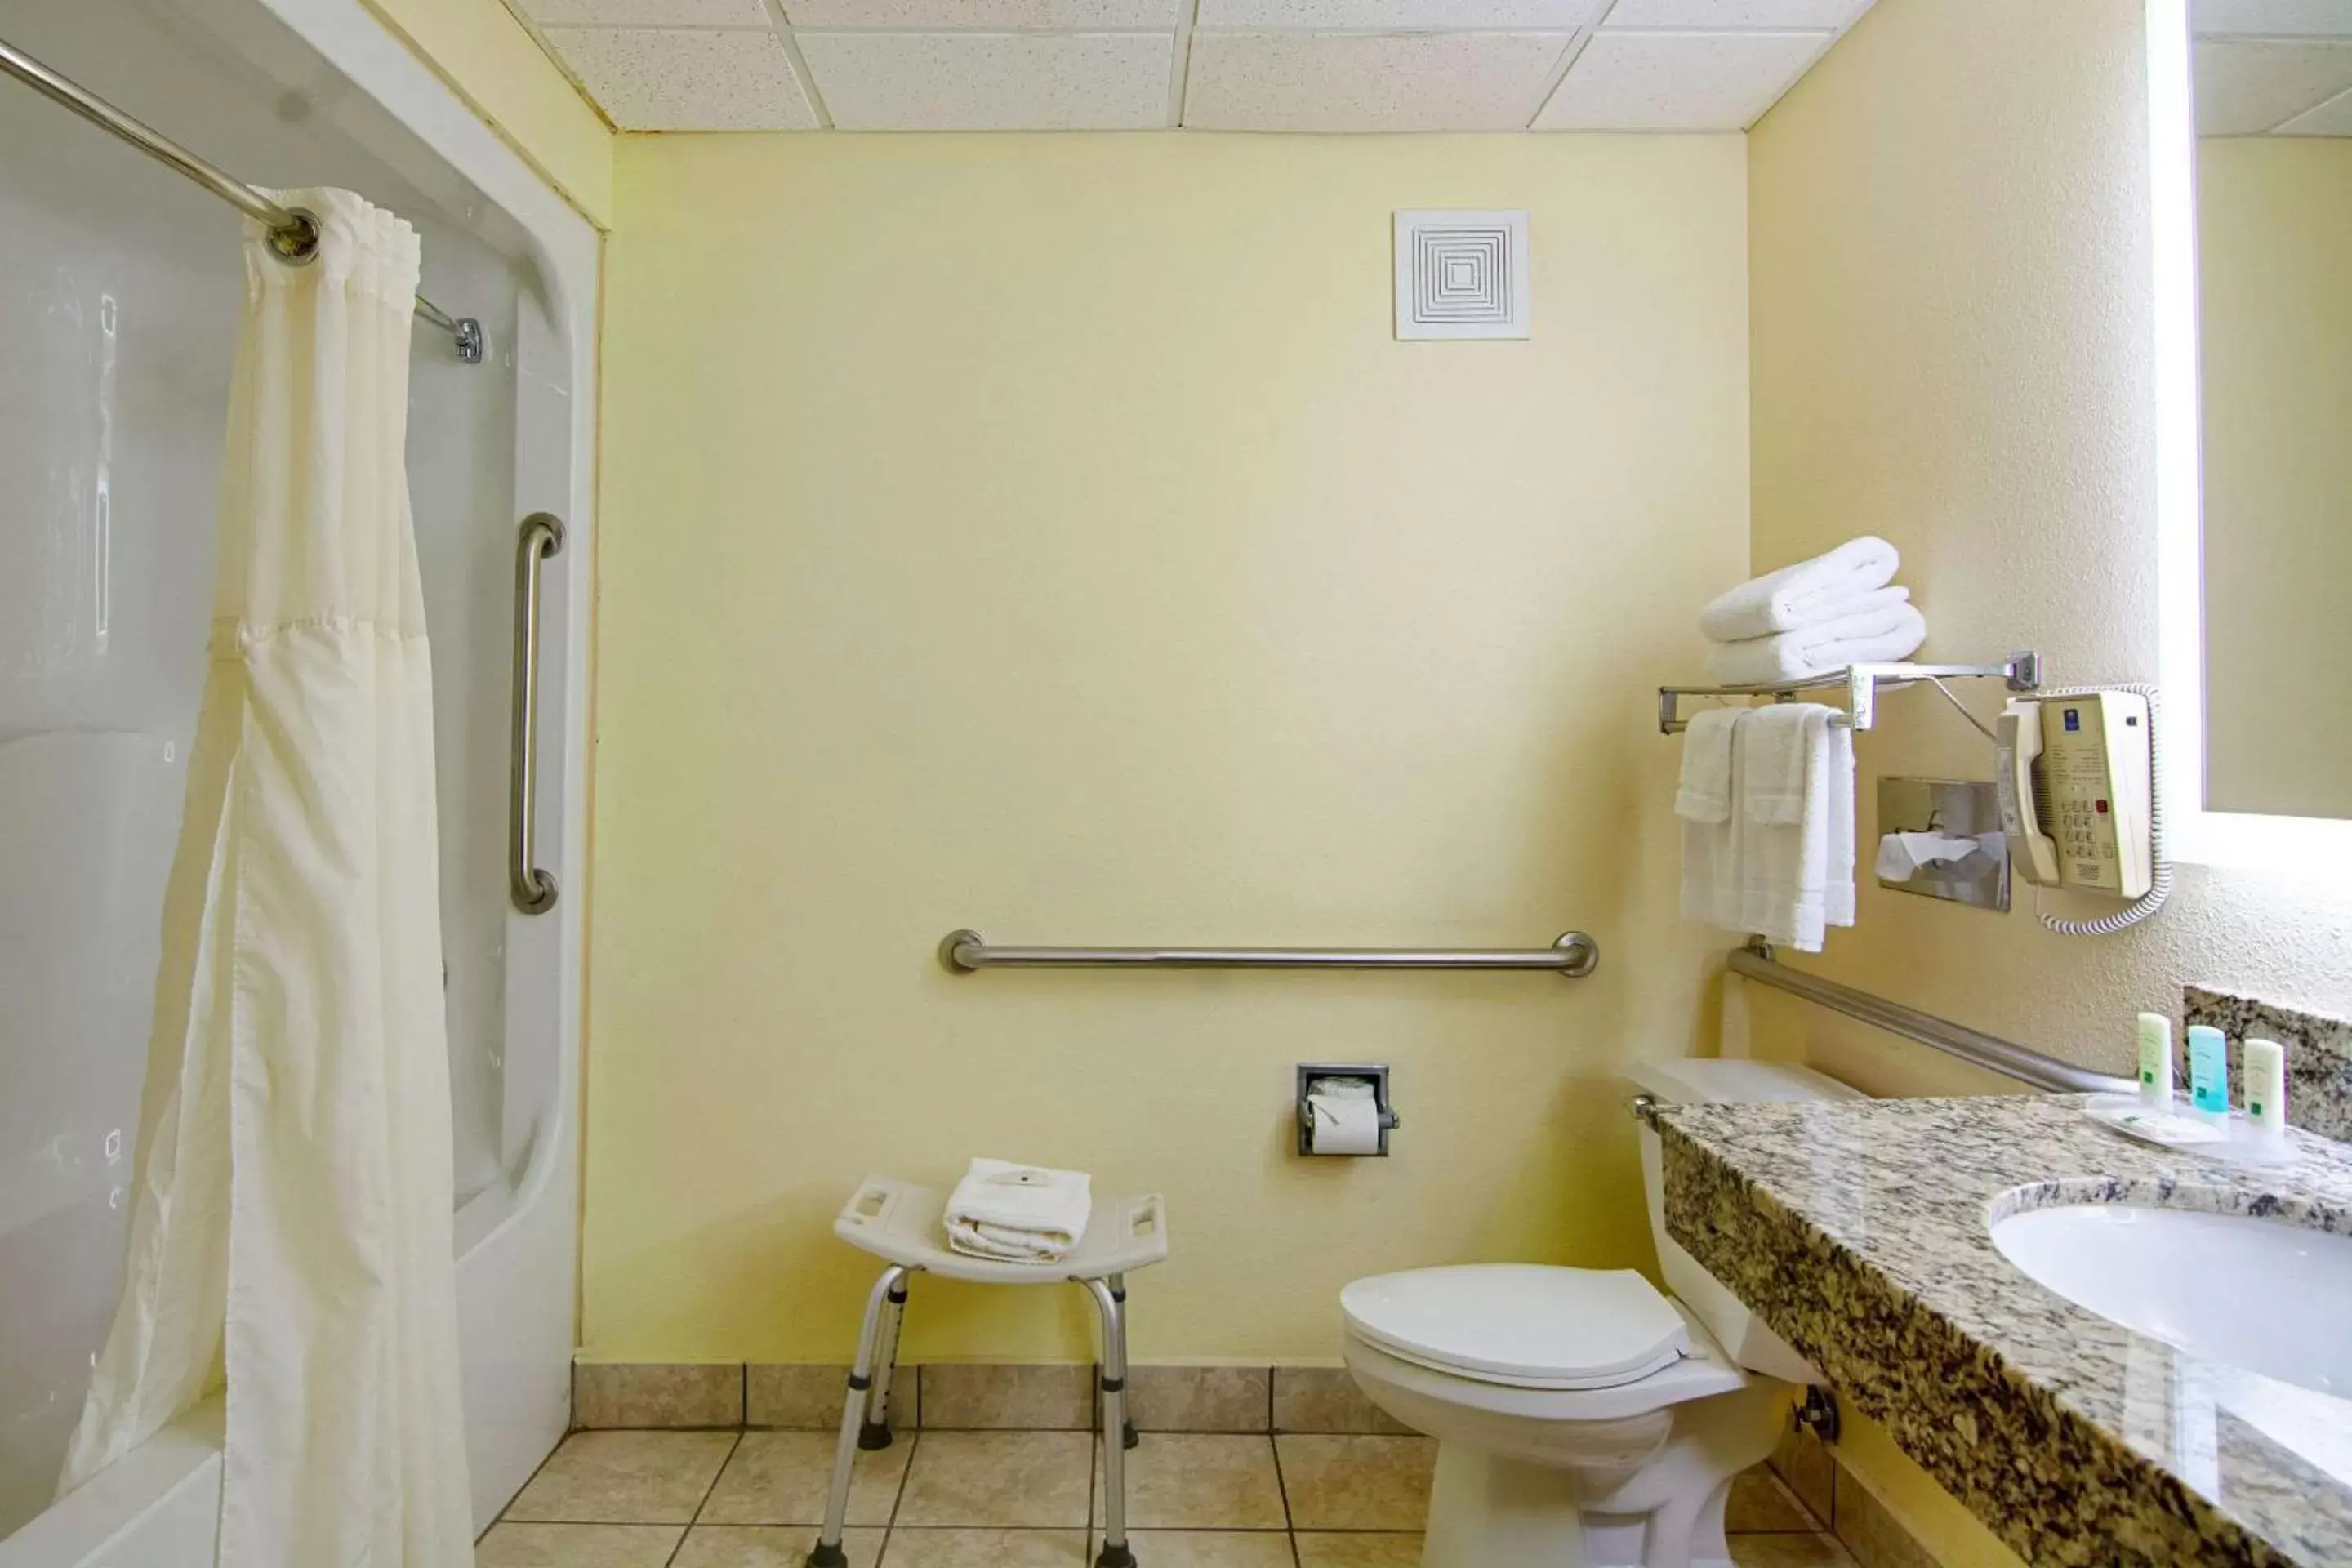 Photo of the whole room, Bathroom in Quality Inn Richburg